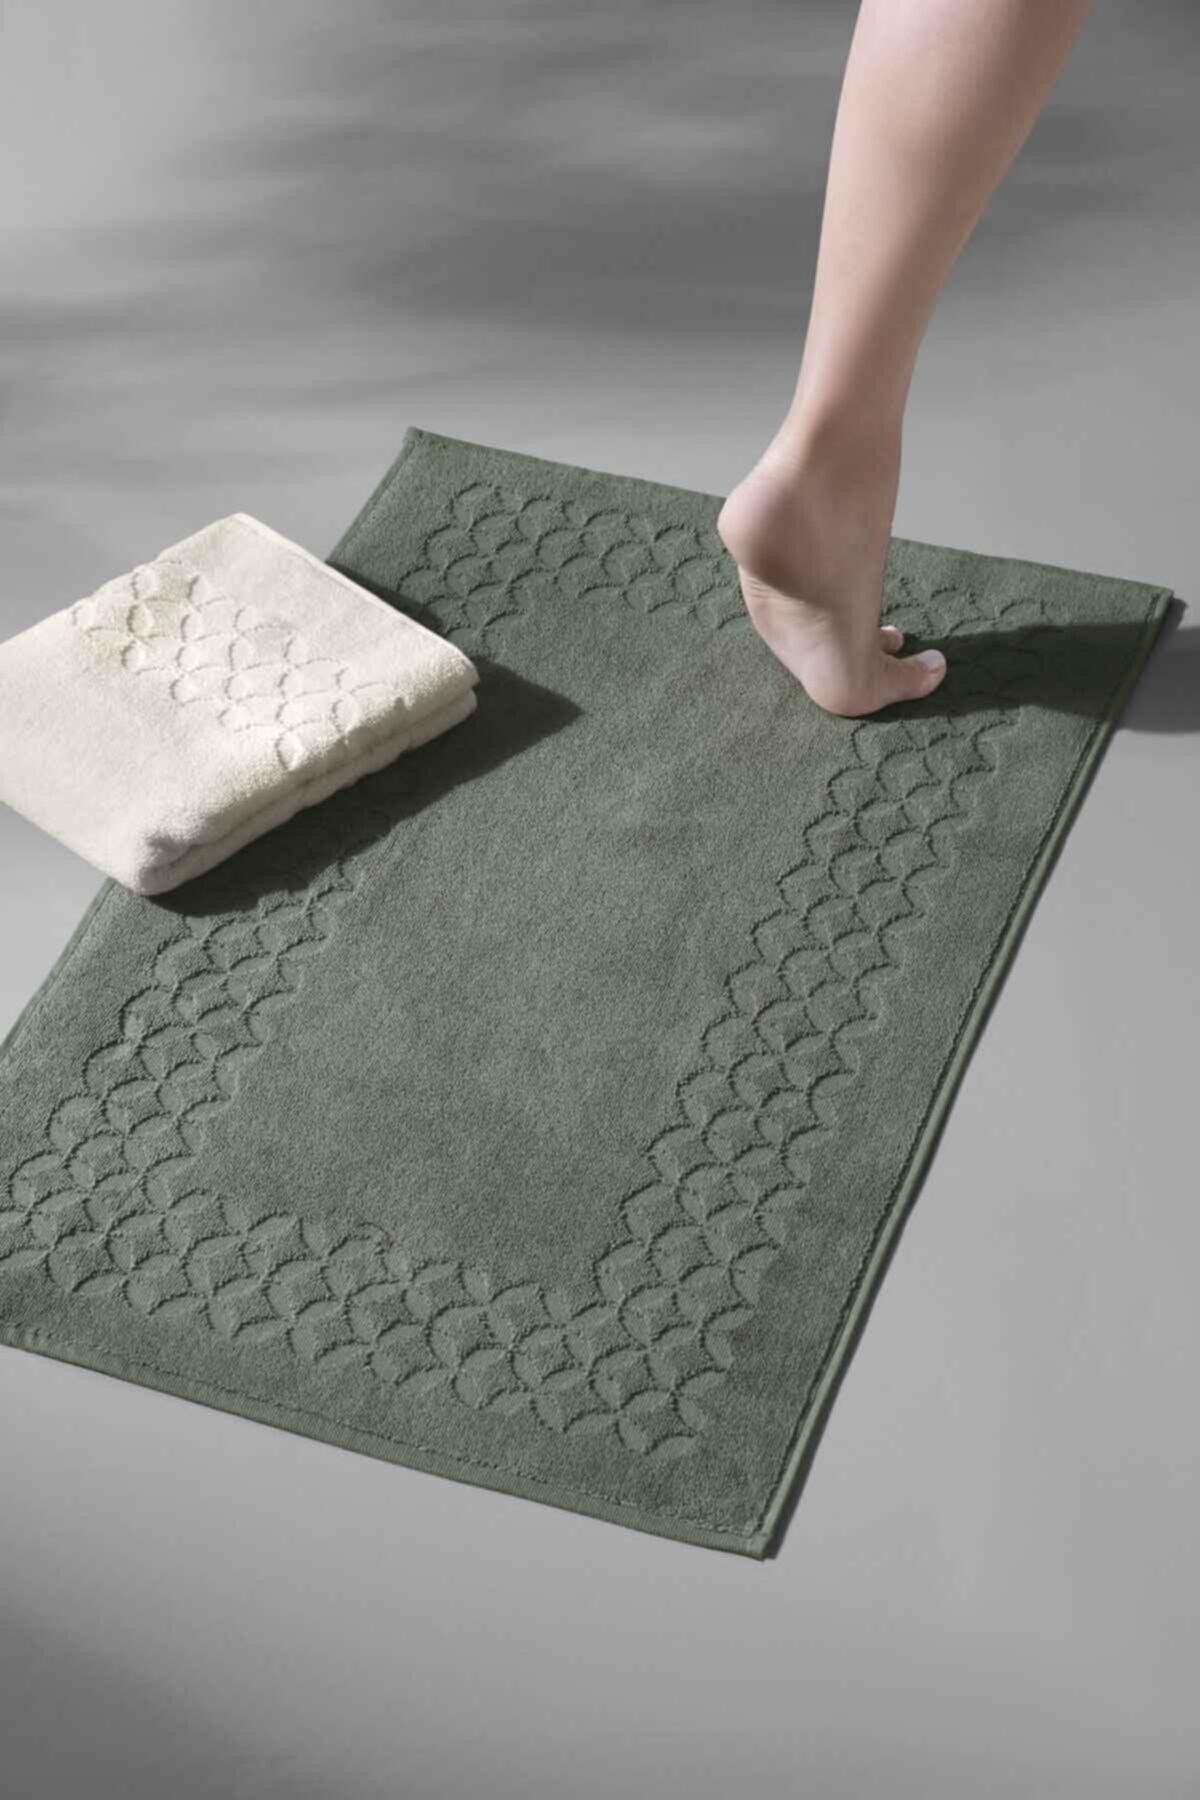 Biscay Bathmat Olive - Extra Soft, Modern 100% Cotton 50x75cm. Foot Towel / Bath Mat Set - Swordslife